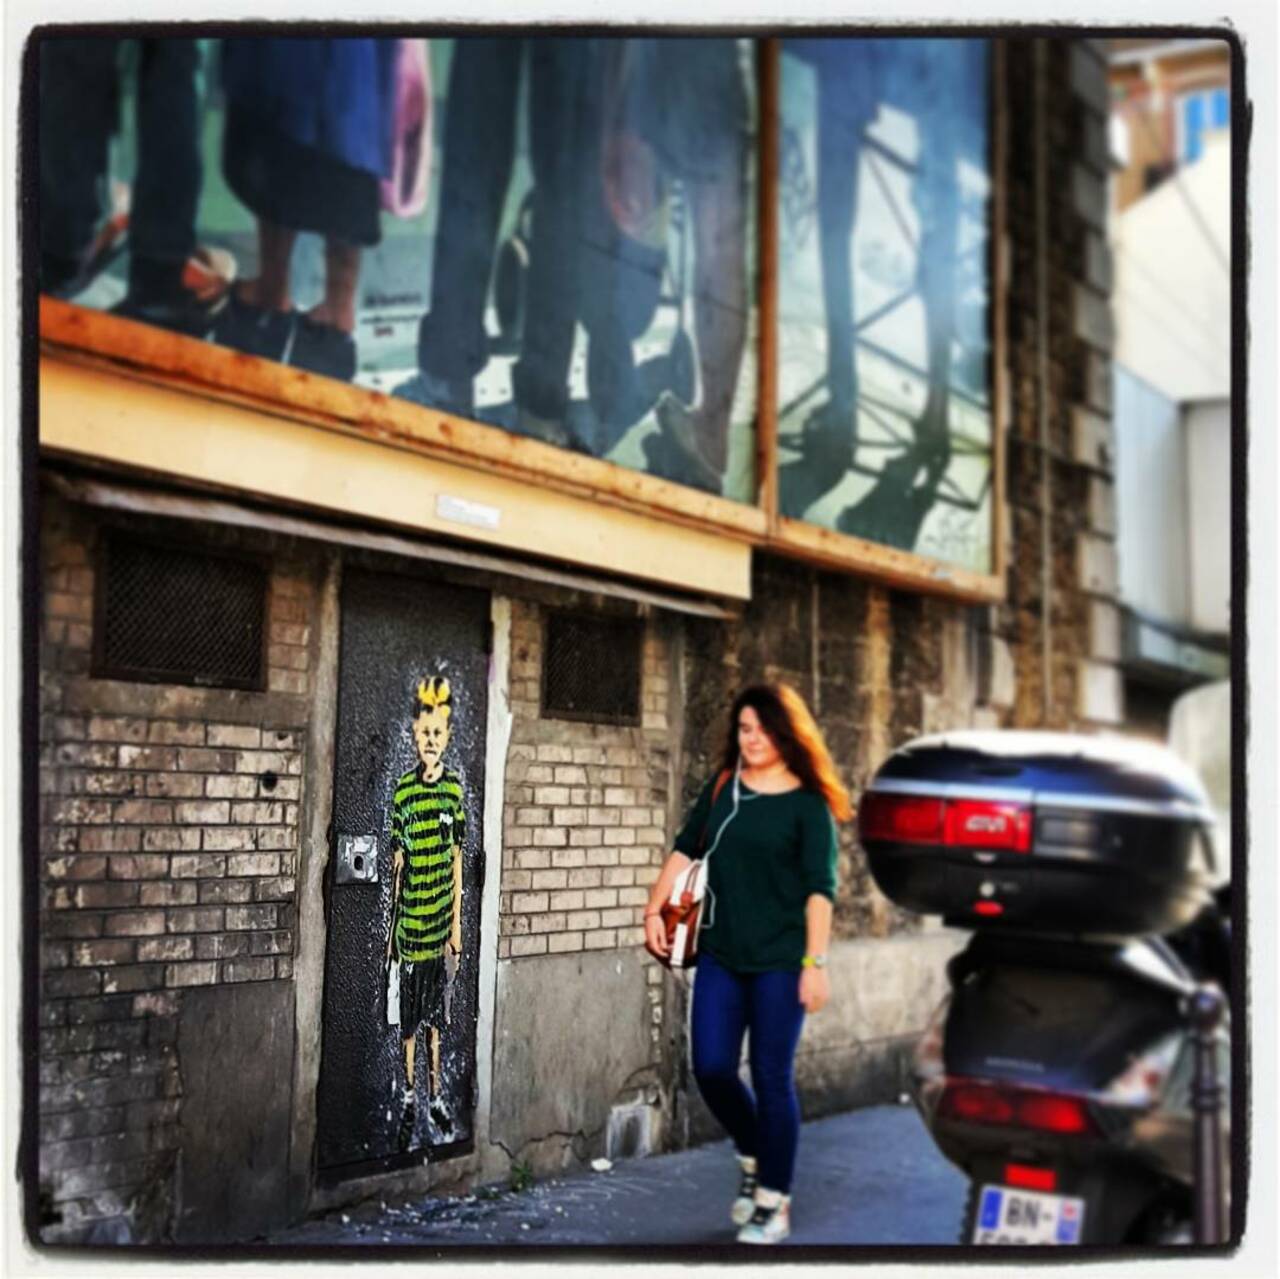 #Paris #graffiti photo by @the169 http://ift.tt/1YVVkK4 #StreetArt http://t.co/OTOsbpFVpC